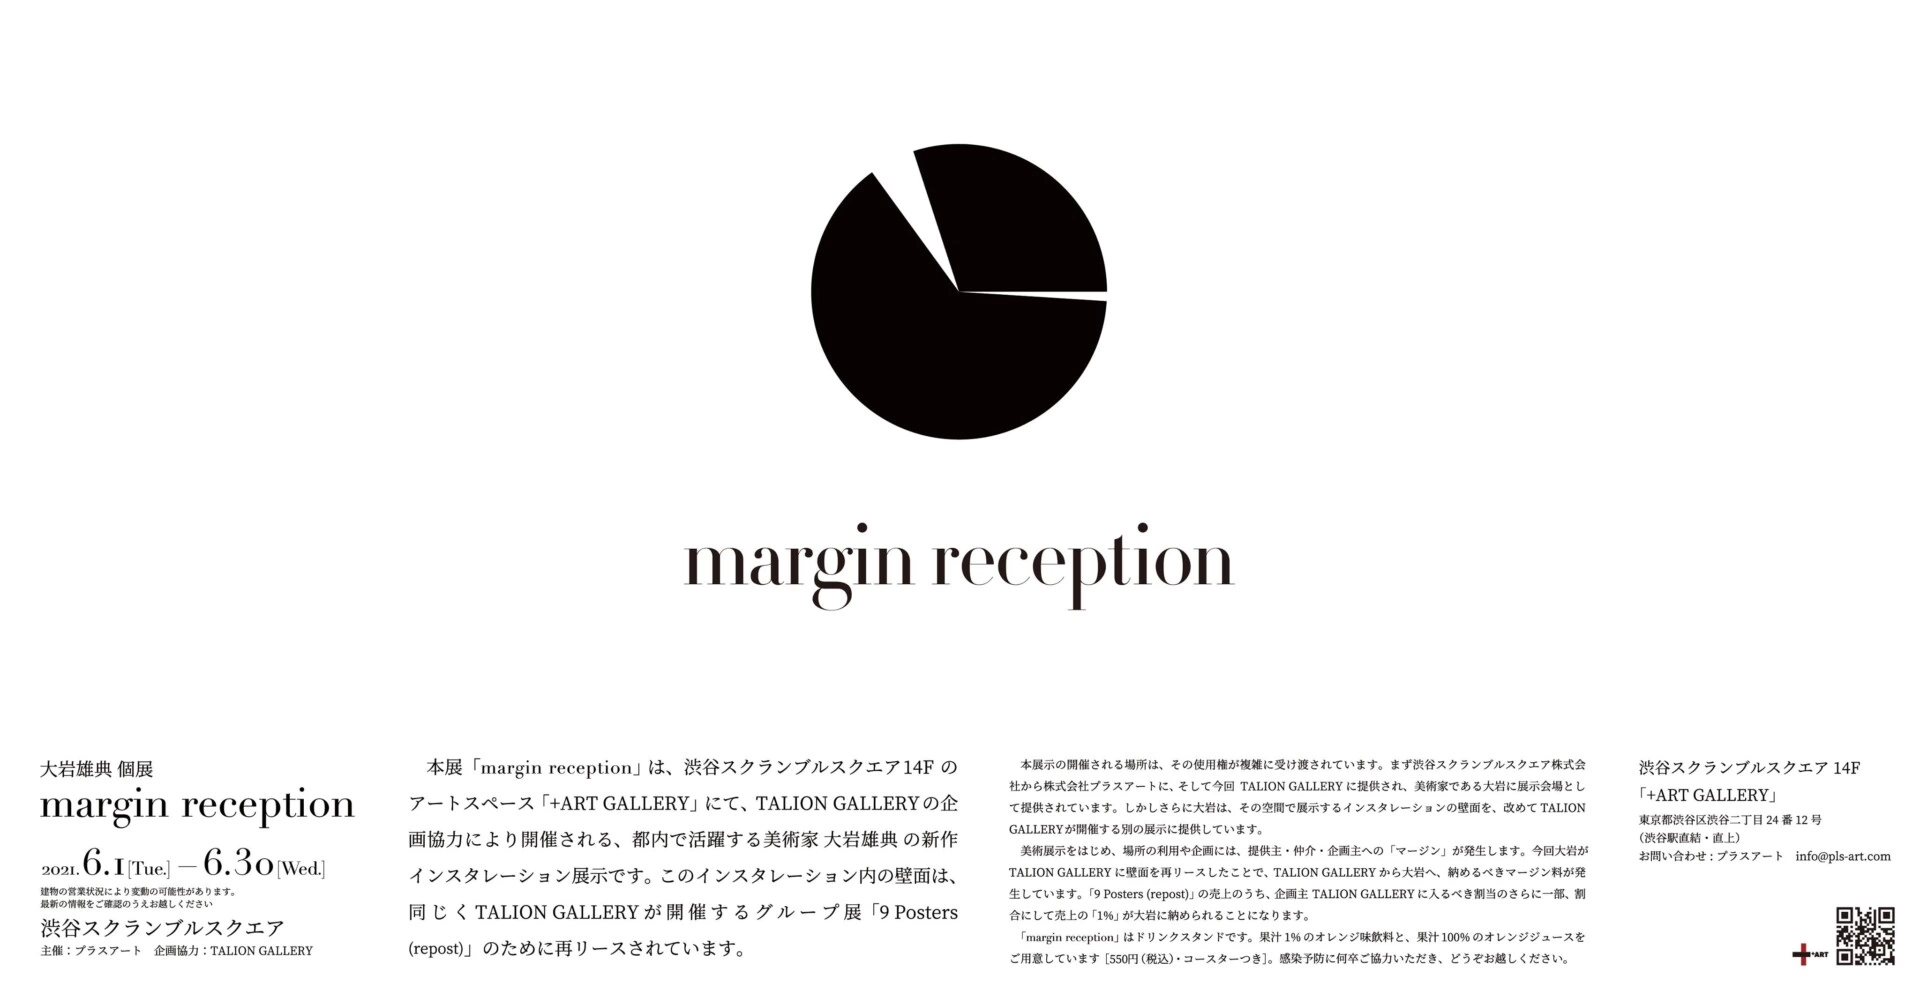 大岩雄典「margin reception」